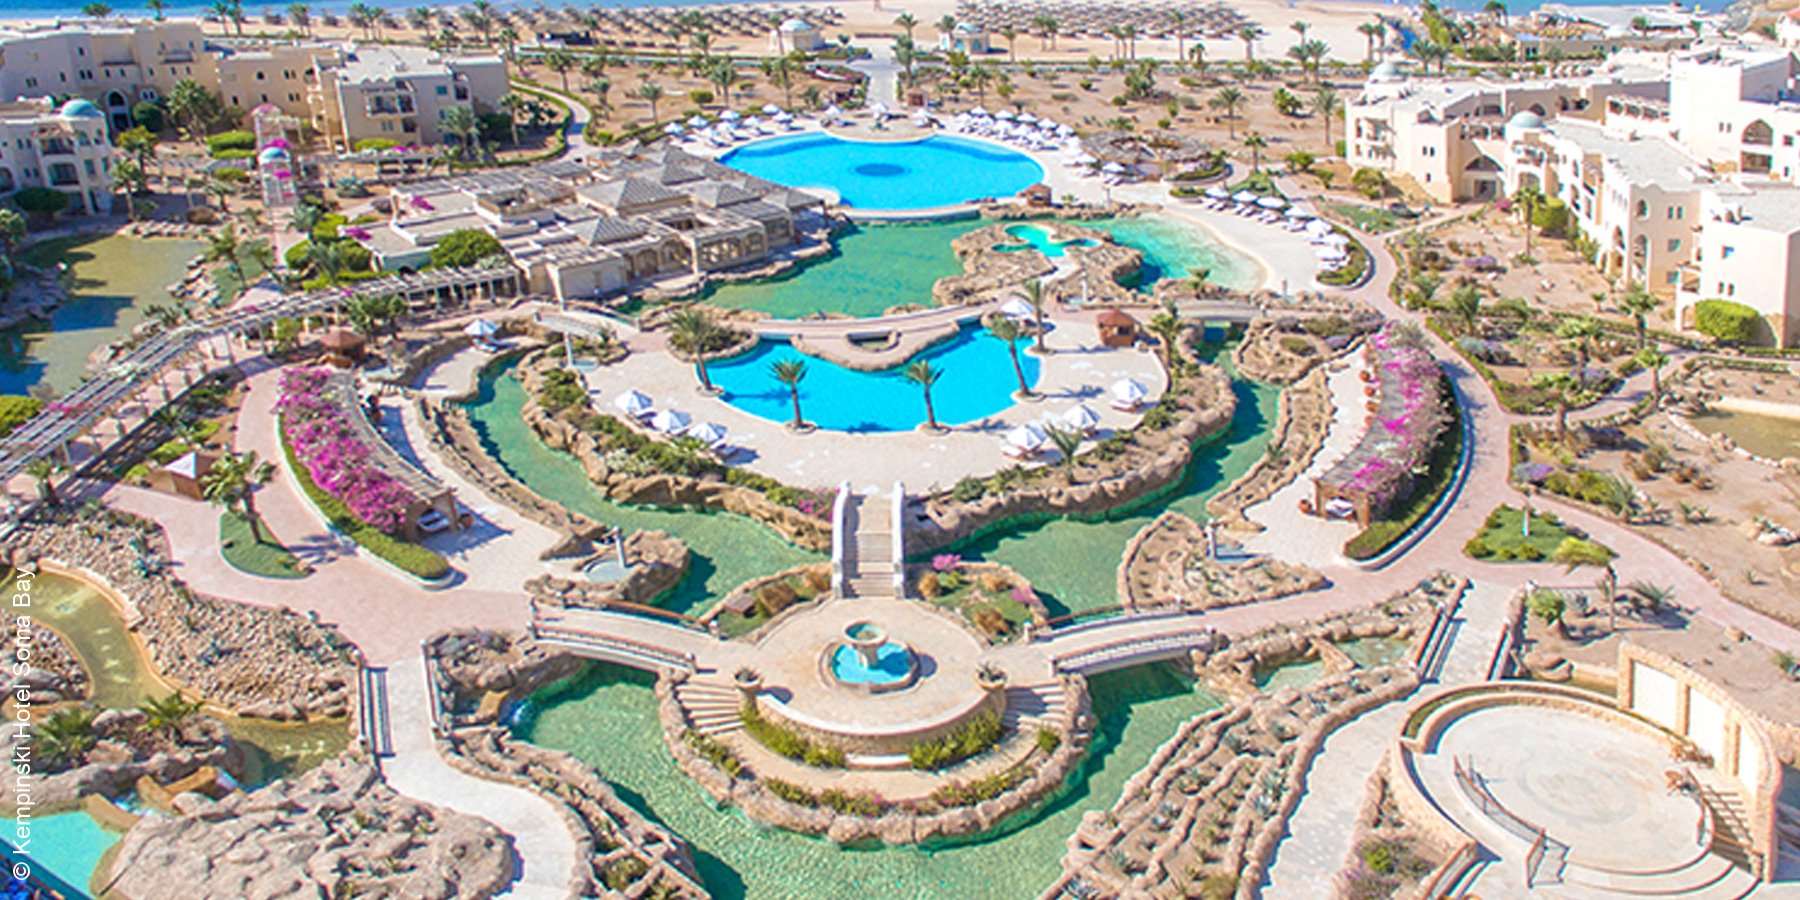 Kempinski Hotel Soma Bay | Ägypten | Pool-Landschaft | luxuszeit.com